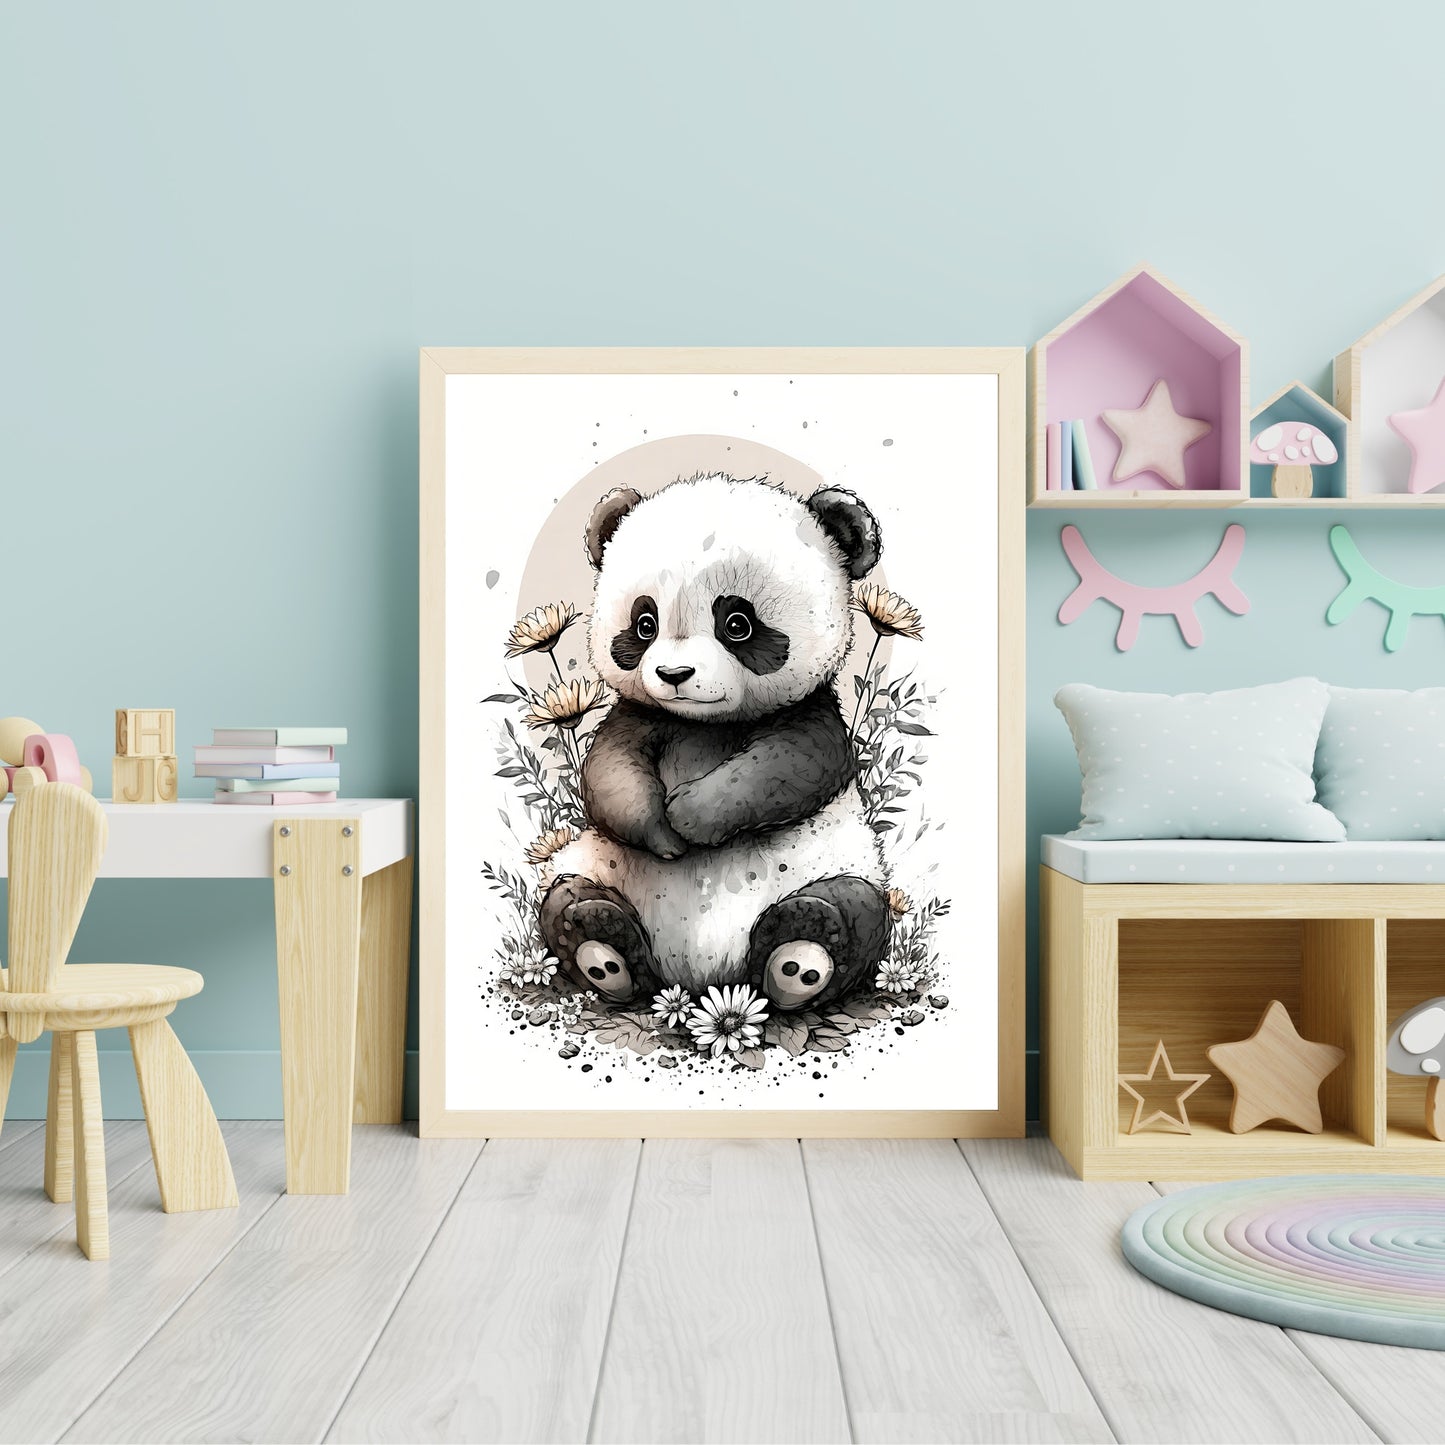 Baby-Panda-Tier-Wandkunst, geschlechtsneutrales Tier-Kinderzimmer, Panda-Druck, Blumen, Baby-Panda-Porträt, Papier-Posterdrucke